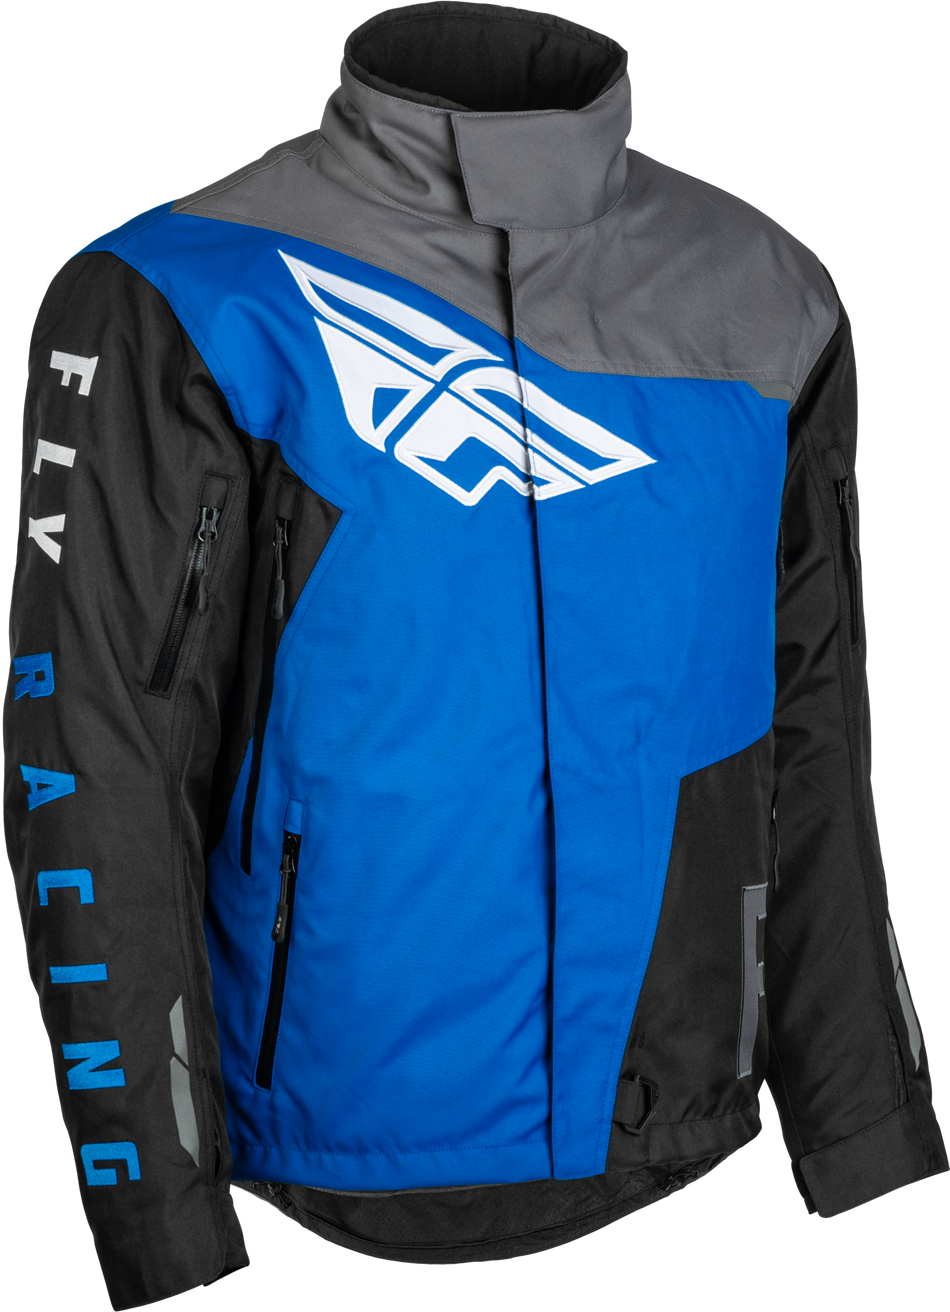 FLY RACING Snx Pro Jacket Black/Grey/Blue 3x 470-41163X